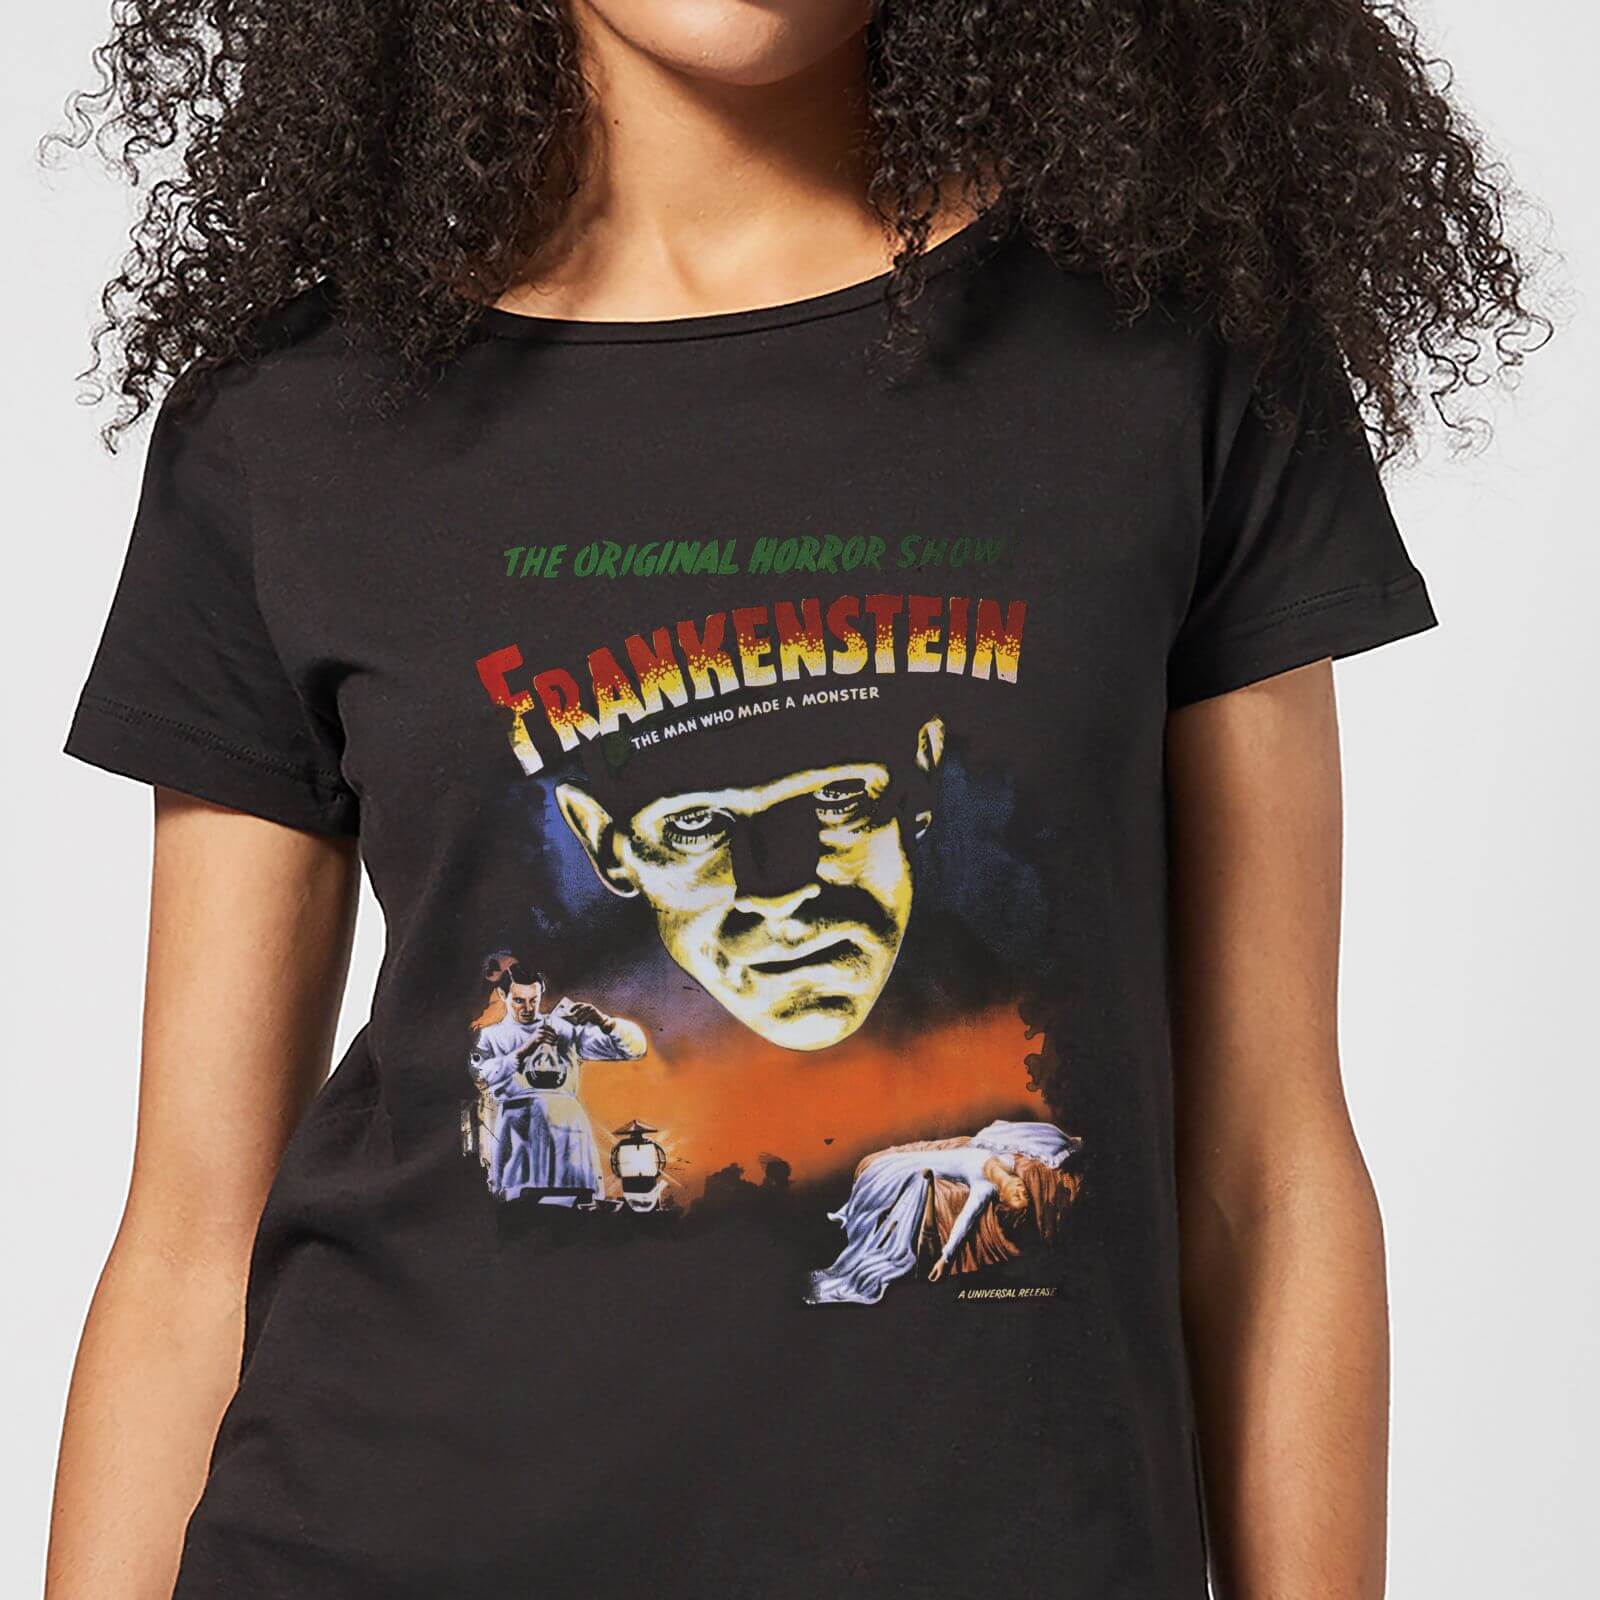 Universal Monsters Frankenstein Vintage Poster Women's T-Shirt - Black - 4XL - Black